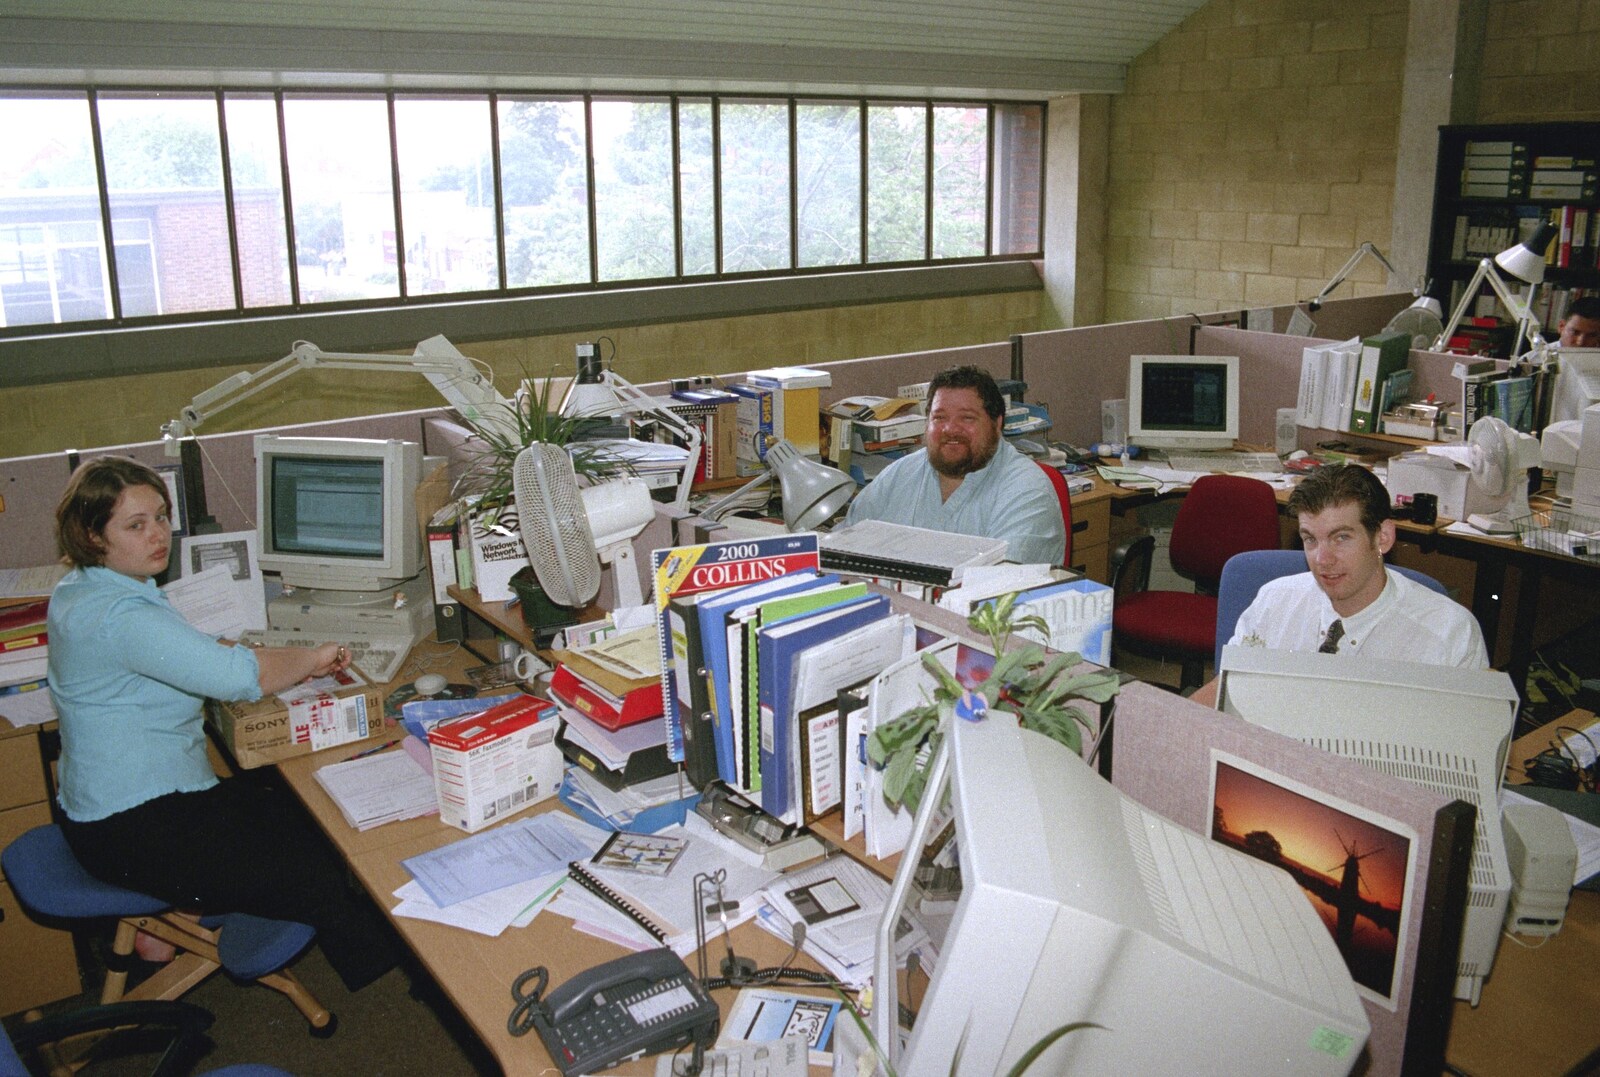 A Last Few Days at CISU, Suffolk County Council, Ipswich - 11th June 2000: Bob and the gang